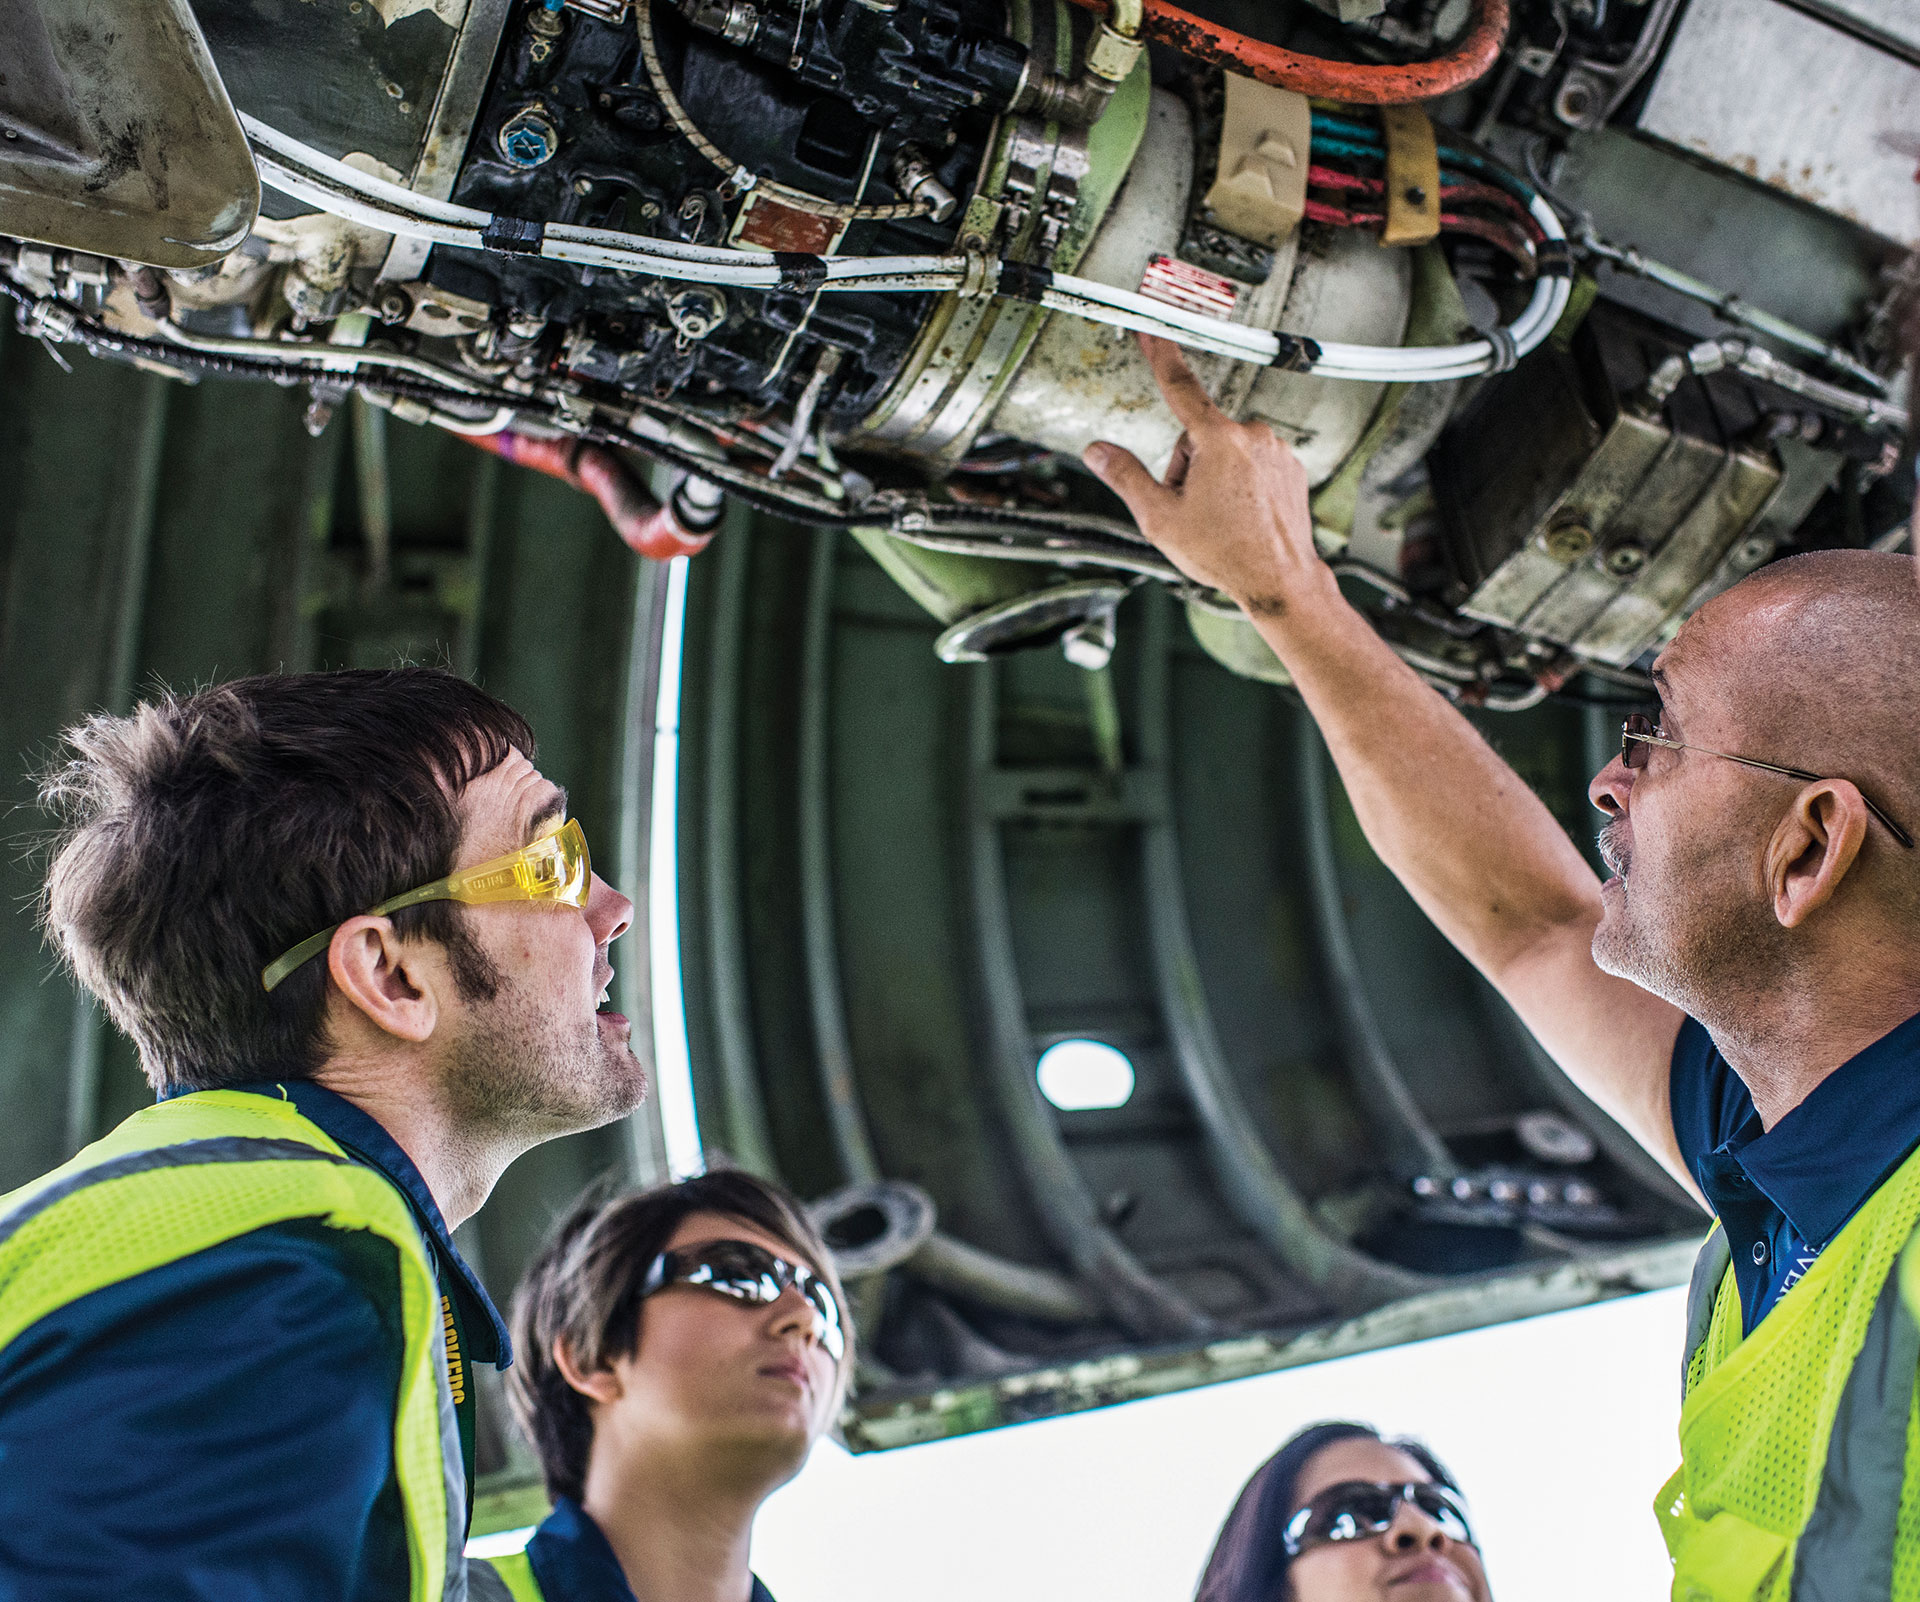 Aeronautics students listen to instructor explain parts of an aircraft engine